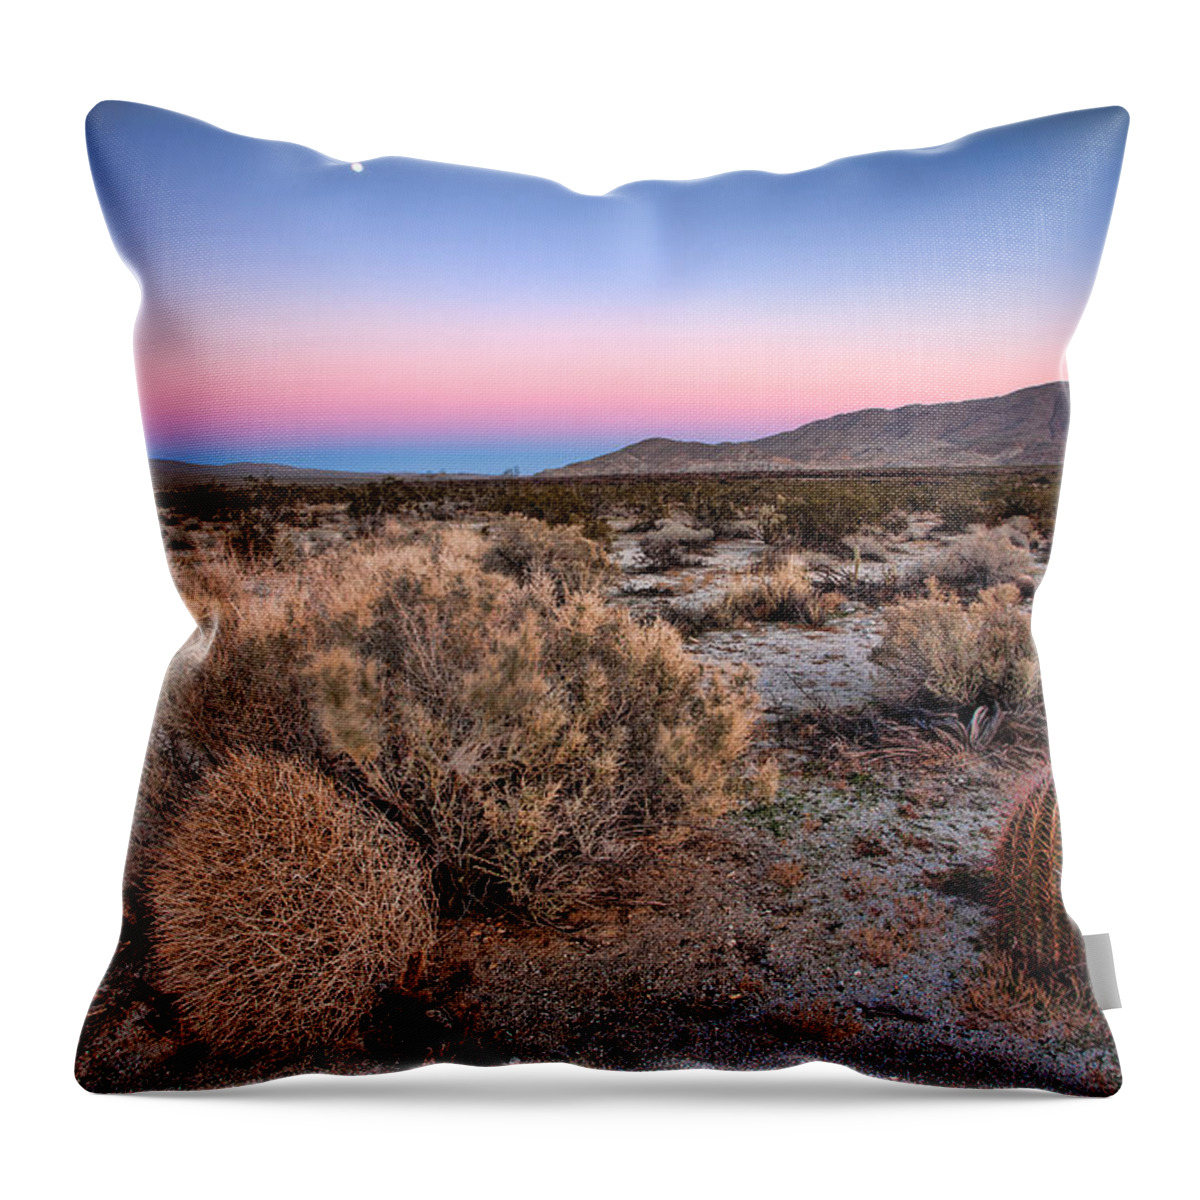 Anza-borrego Desert Throw Pillow featuring the photograph Desert Twilight by Peter Tellone